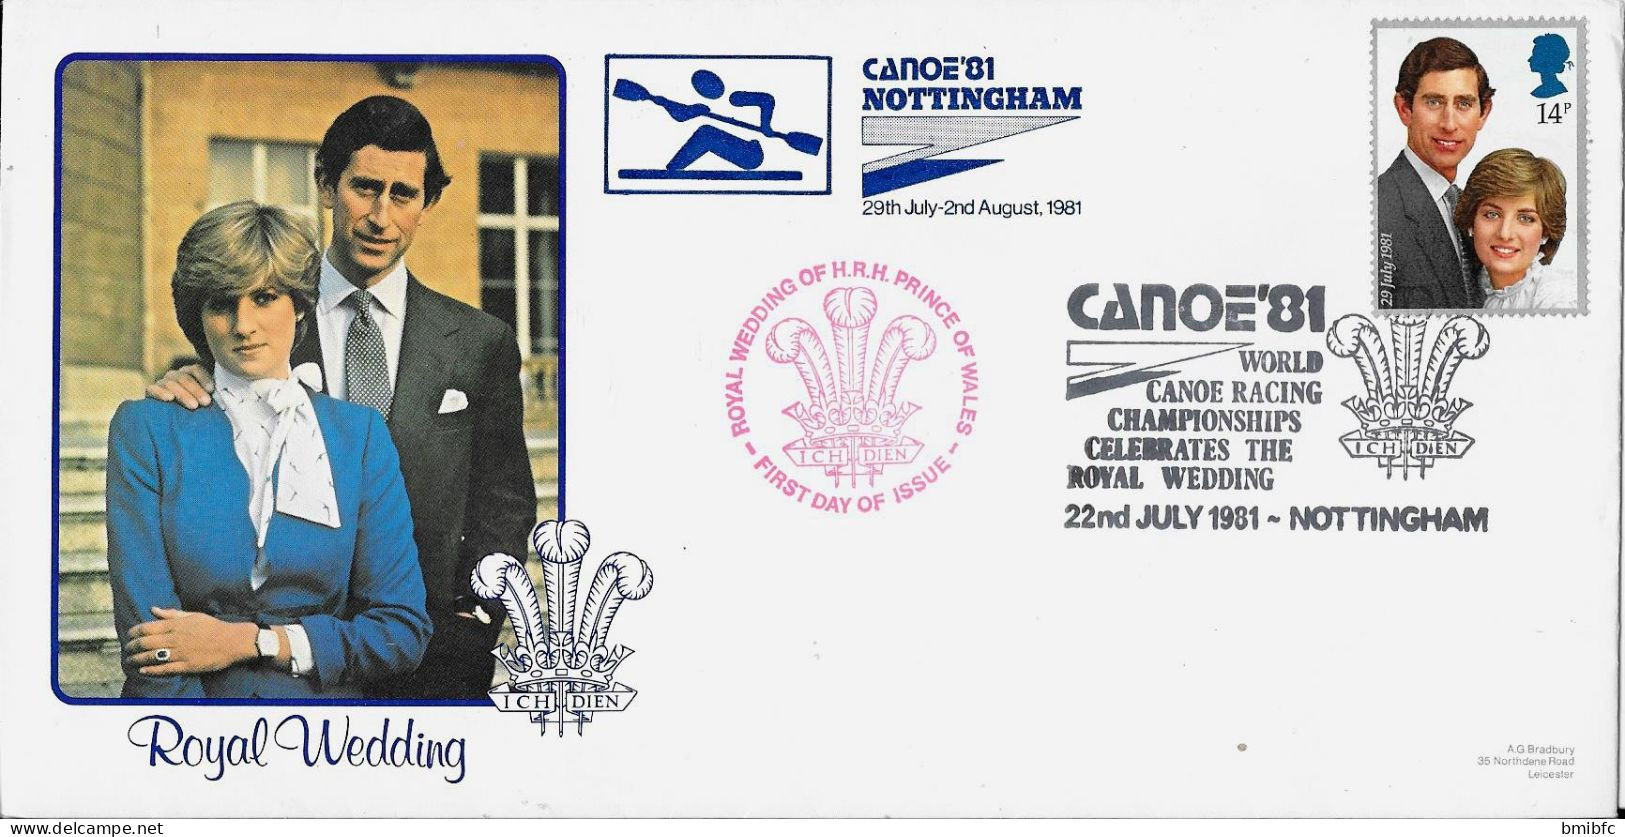 CANOE'81 NOTTINGHAM 22nd JULY 1981 - Canoë